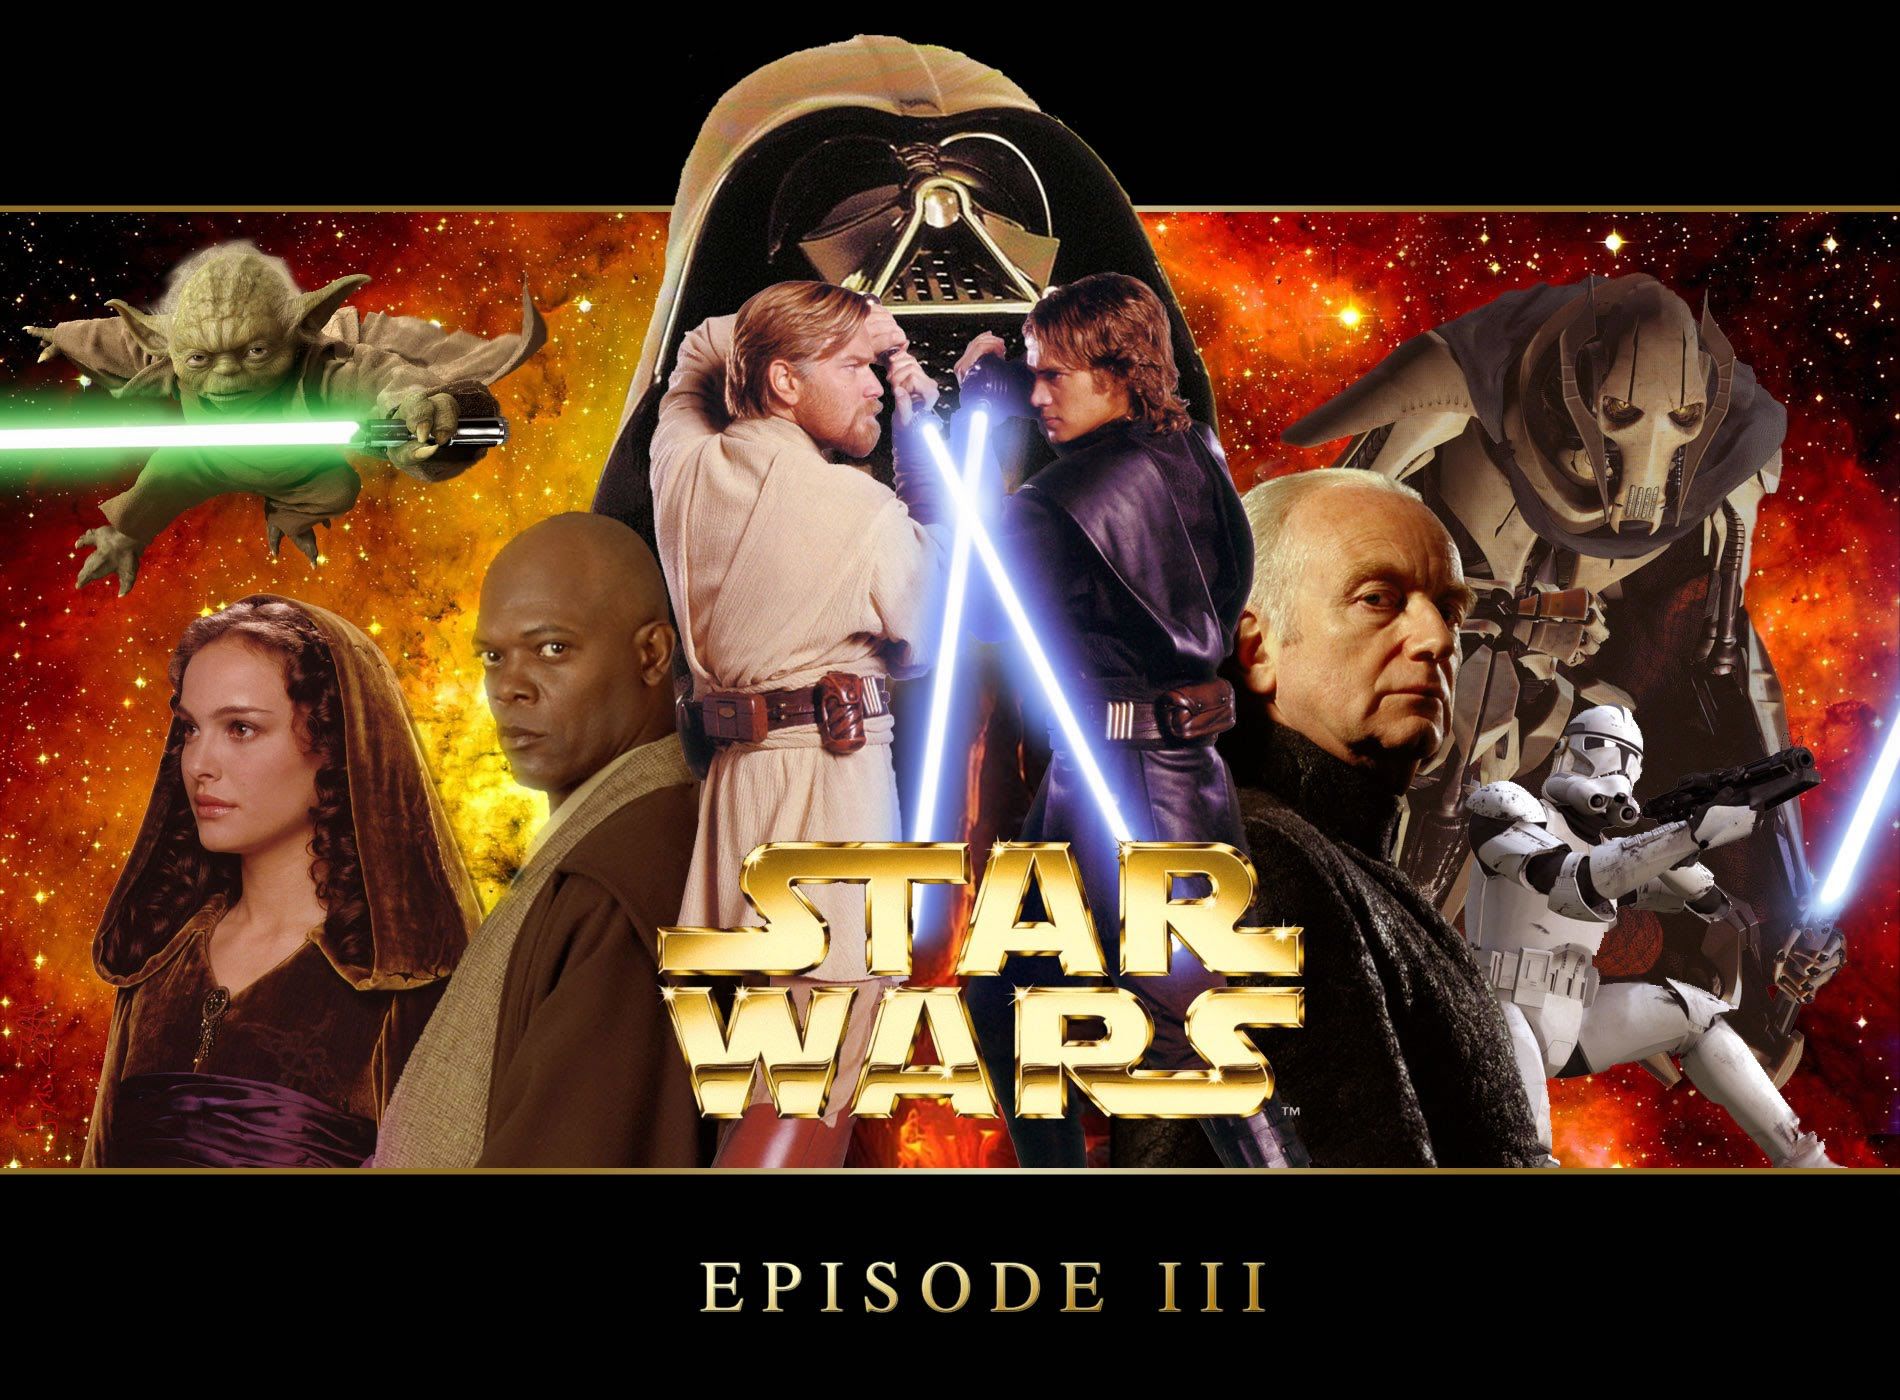 Download Wallpaper Wars Episode Iii Revenge Of The Sith Cast Wallpaper & Background Download